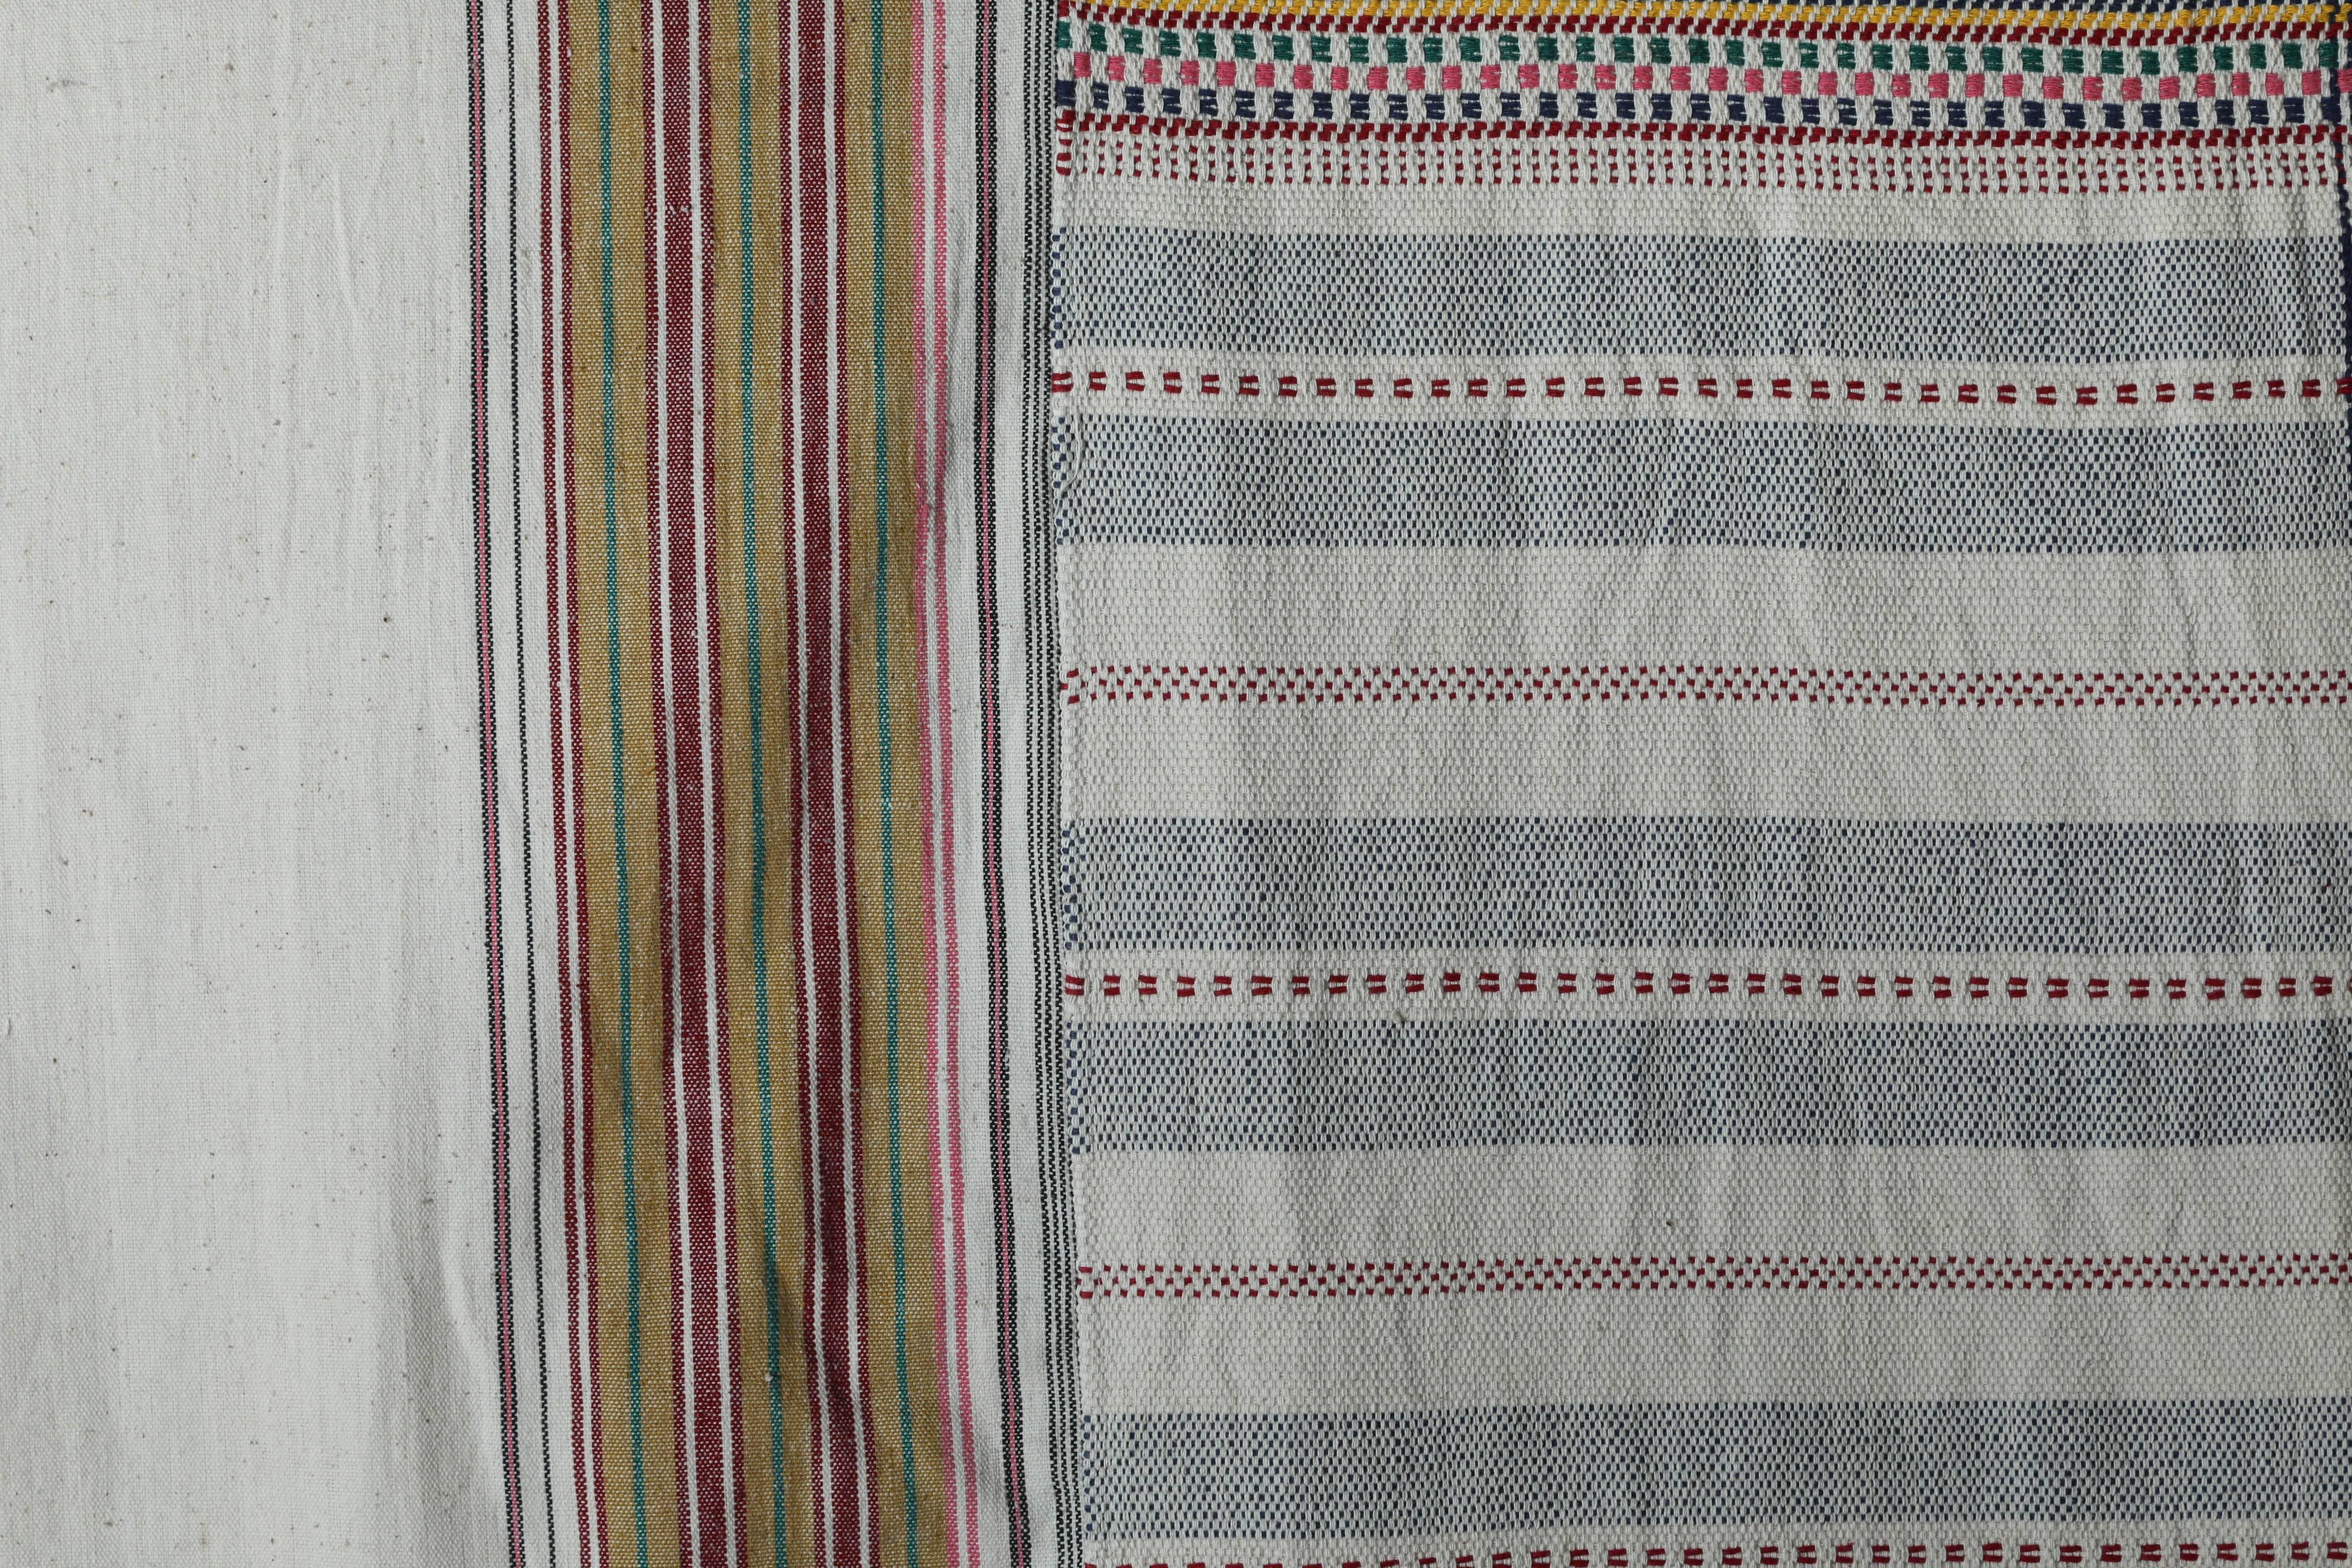 injiri textiles